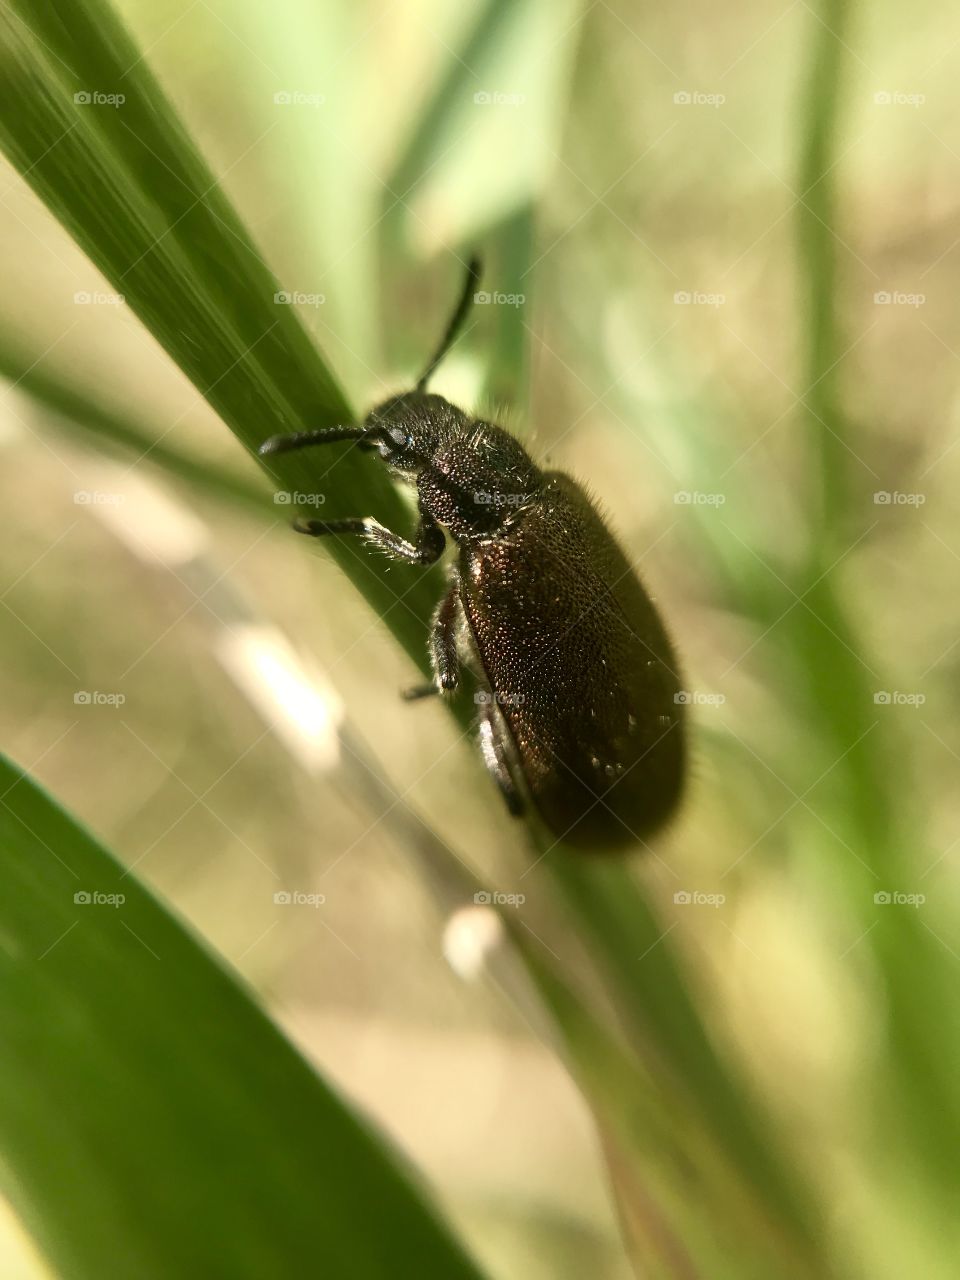 Nice beetle | Photo with iPhone 7 + Macro lens.